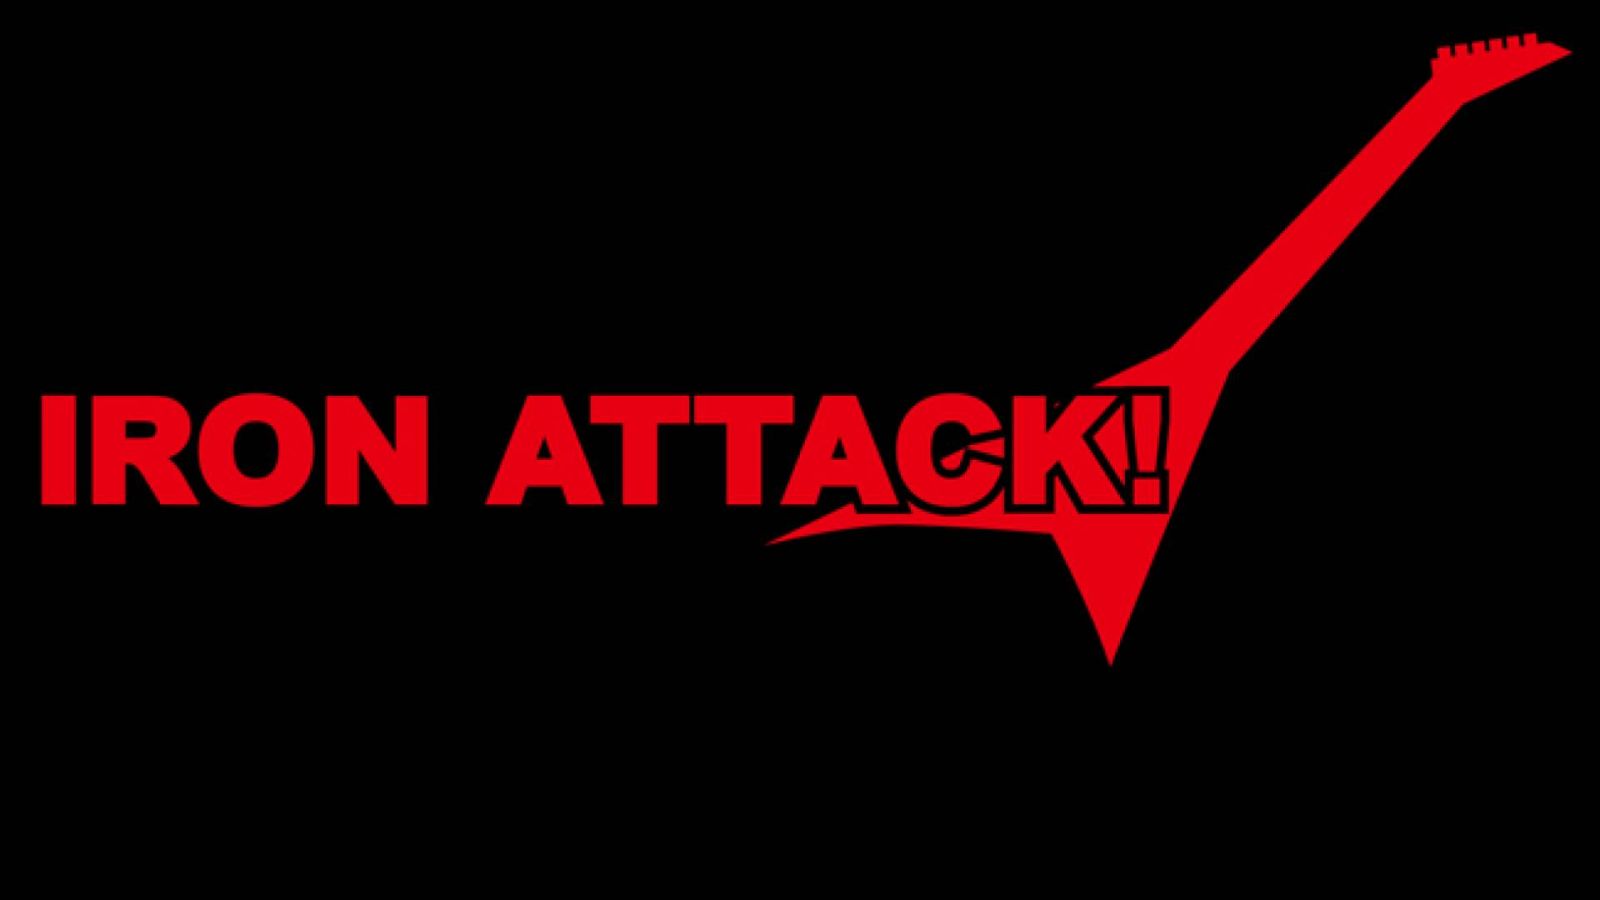 Vuodenvaihteen videoviestit: IRON ATTACK! © 2015 IRON ATTACK! All rights reserved.